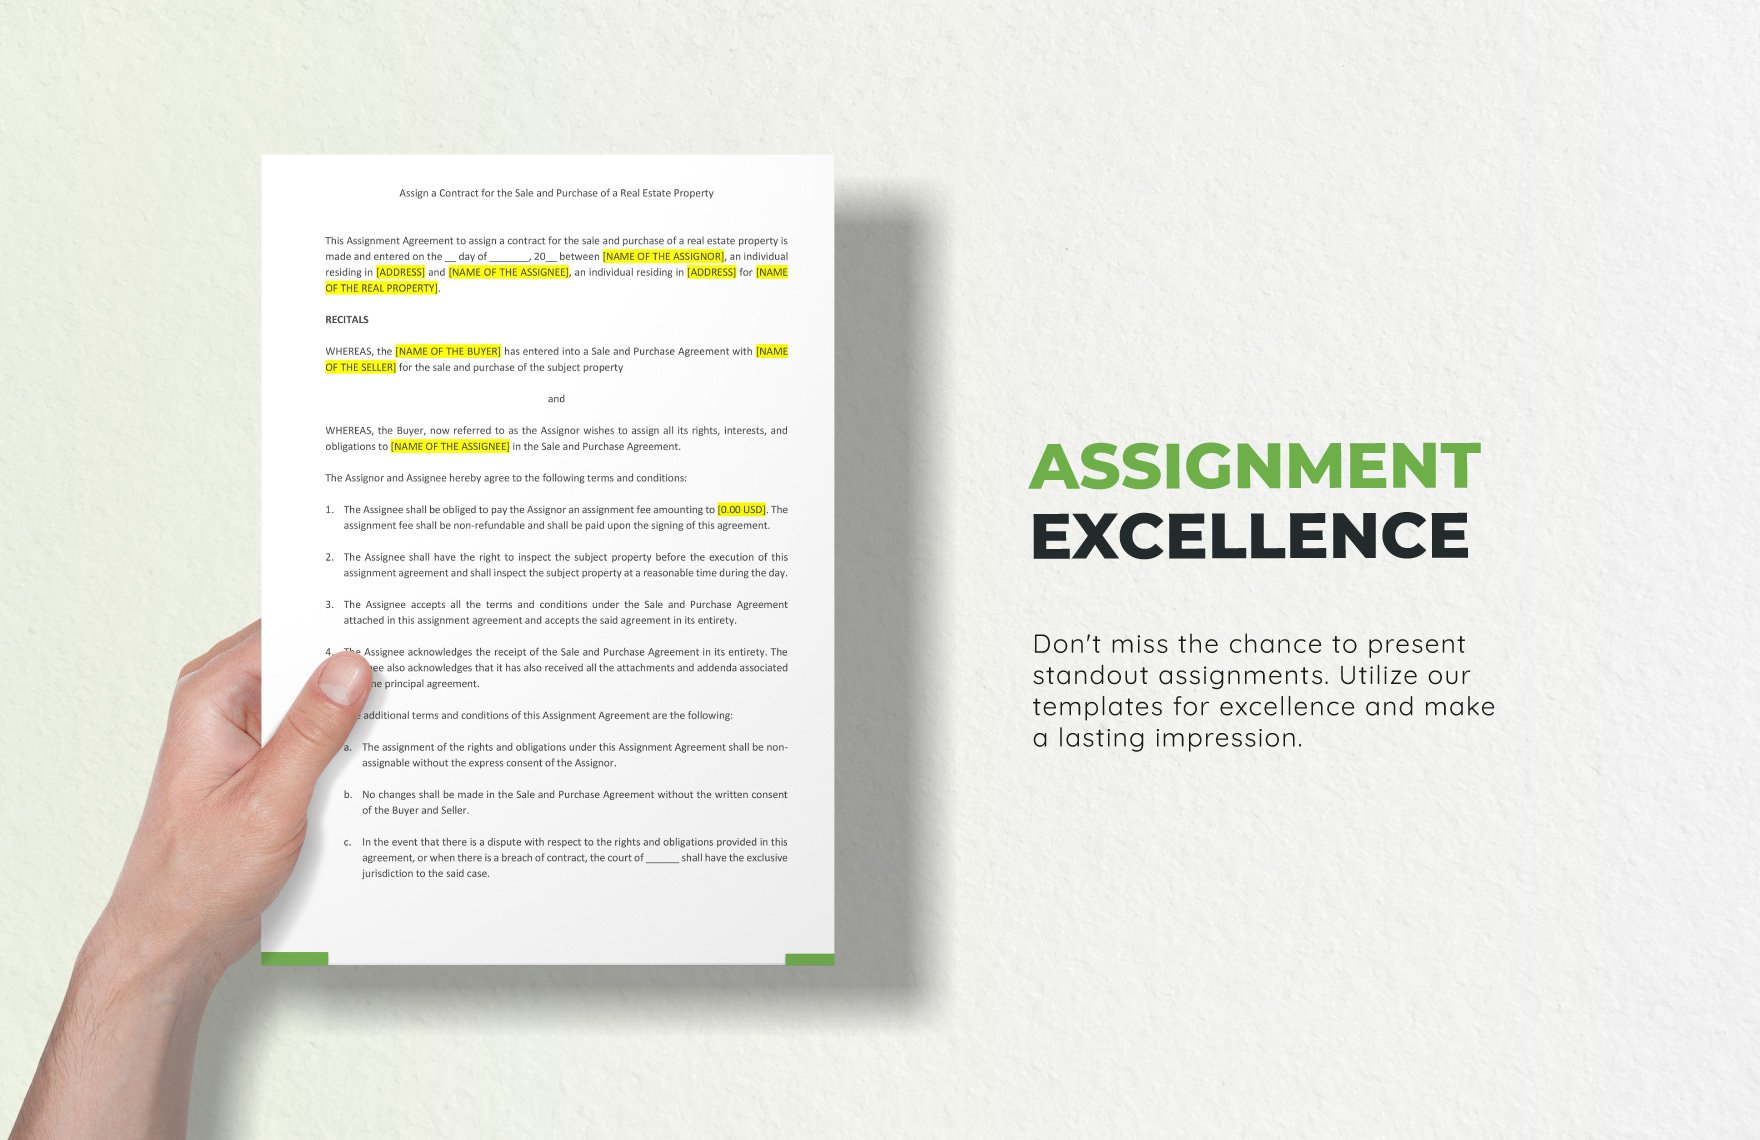 Assignment Agreement Template